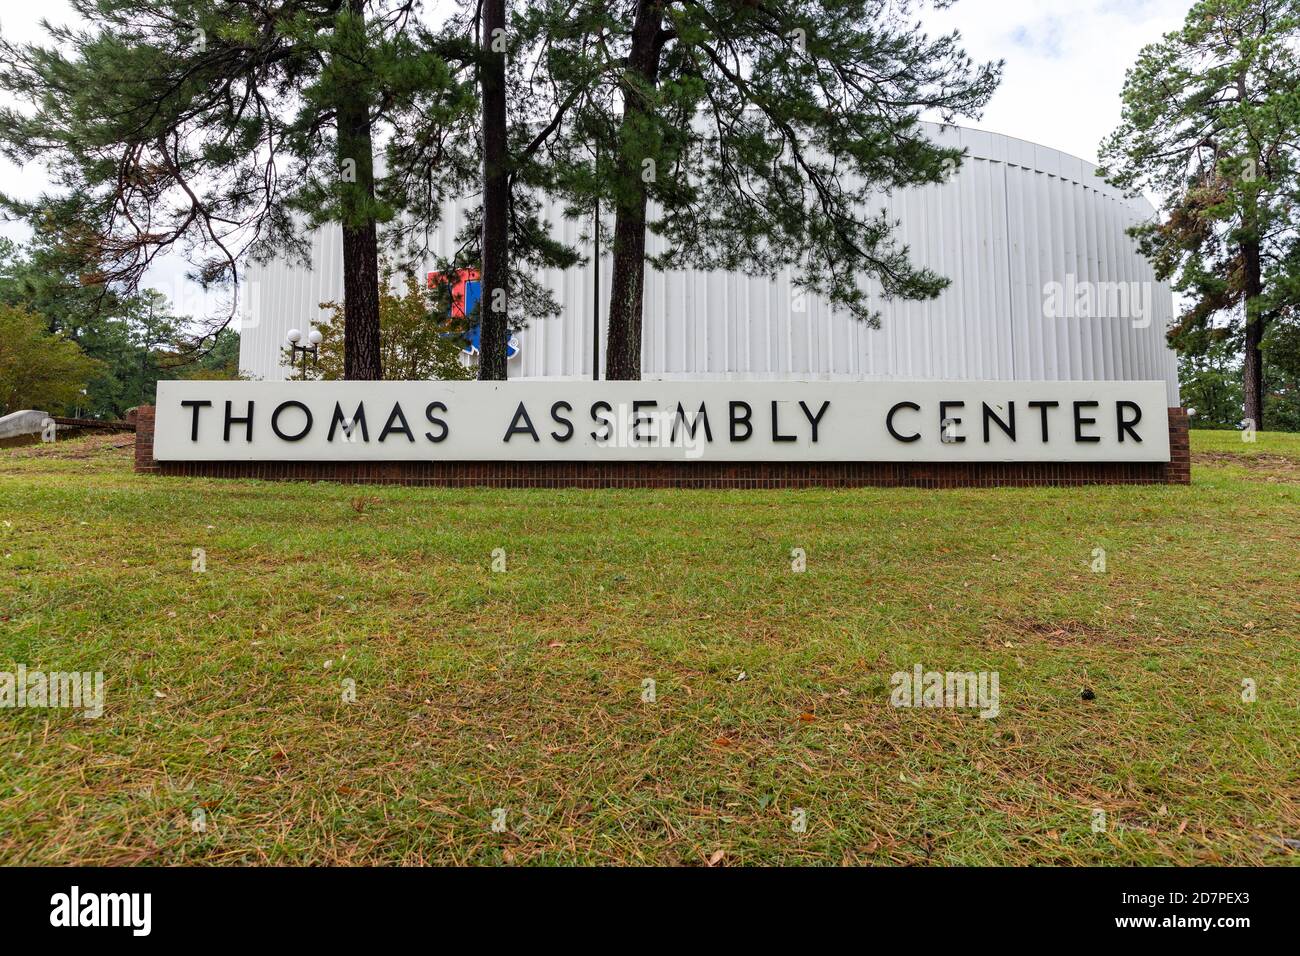 Ruston, LA / USA - 10. Oktober 2020: Thomas Assembly Center auf dem Campus von Louisiana Tech Stockfoto